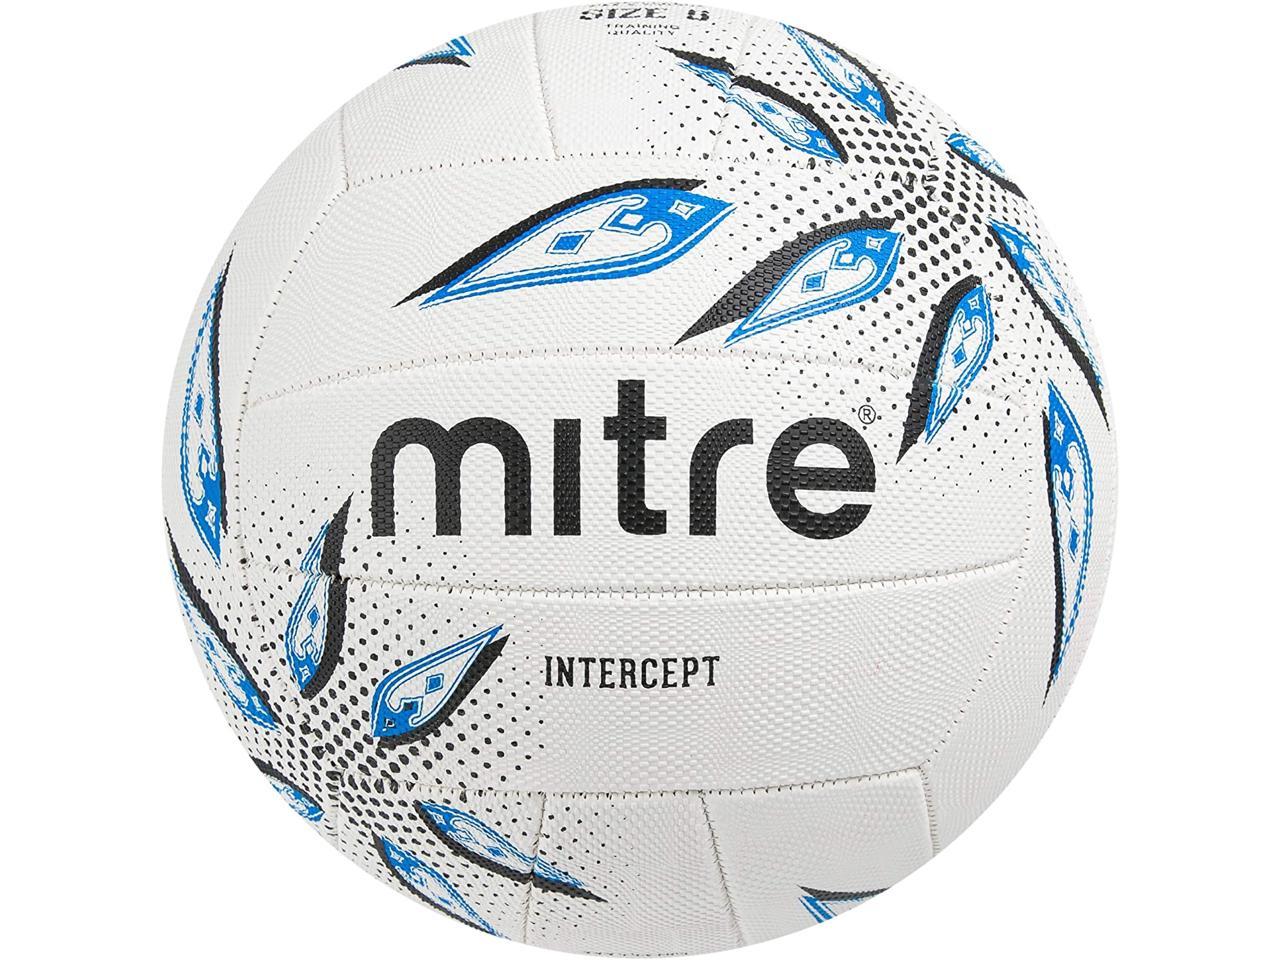 Mitre Intercept Training Netball